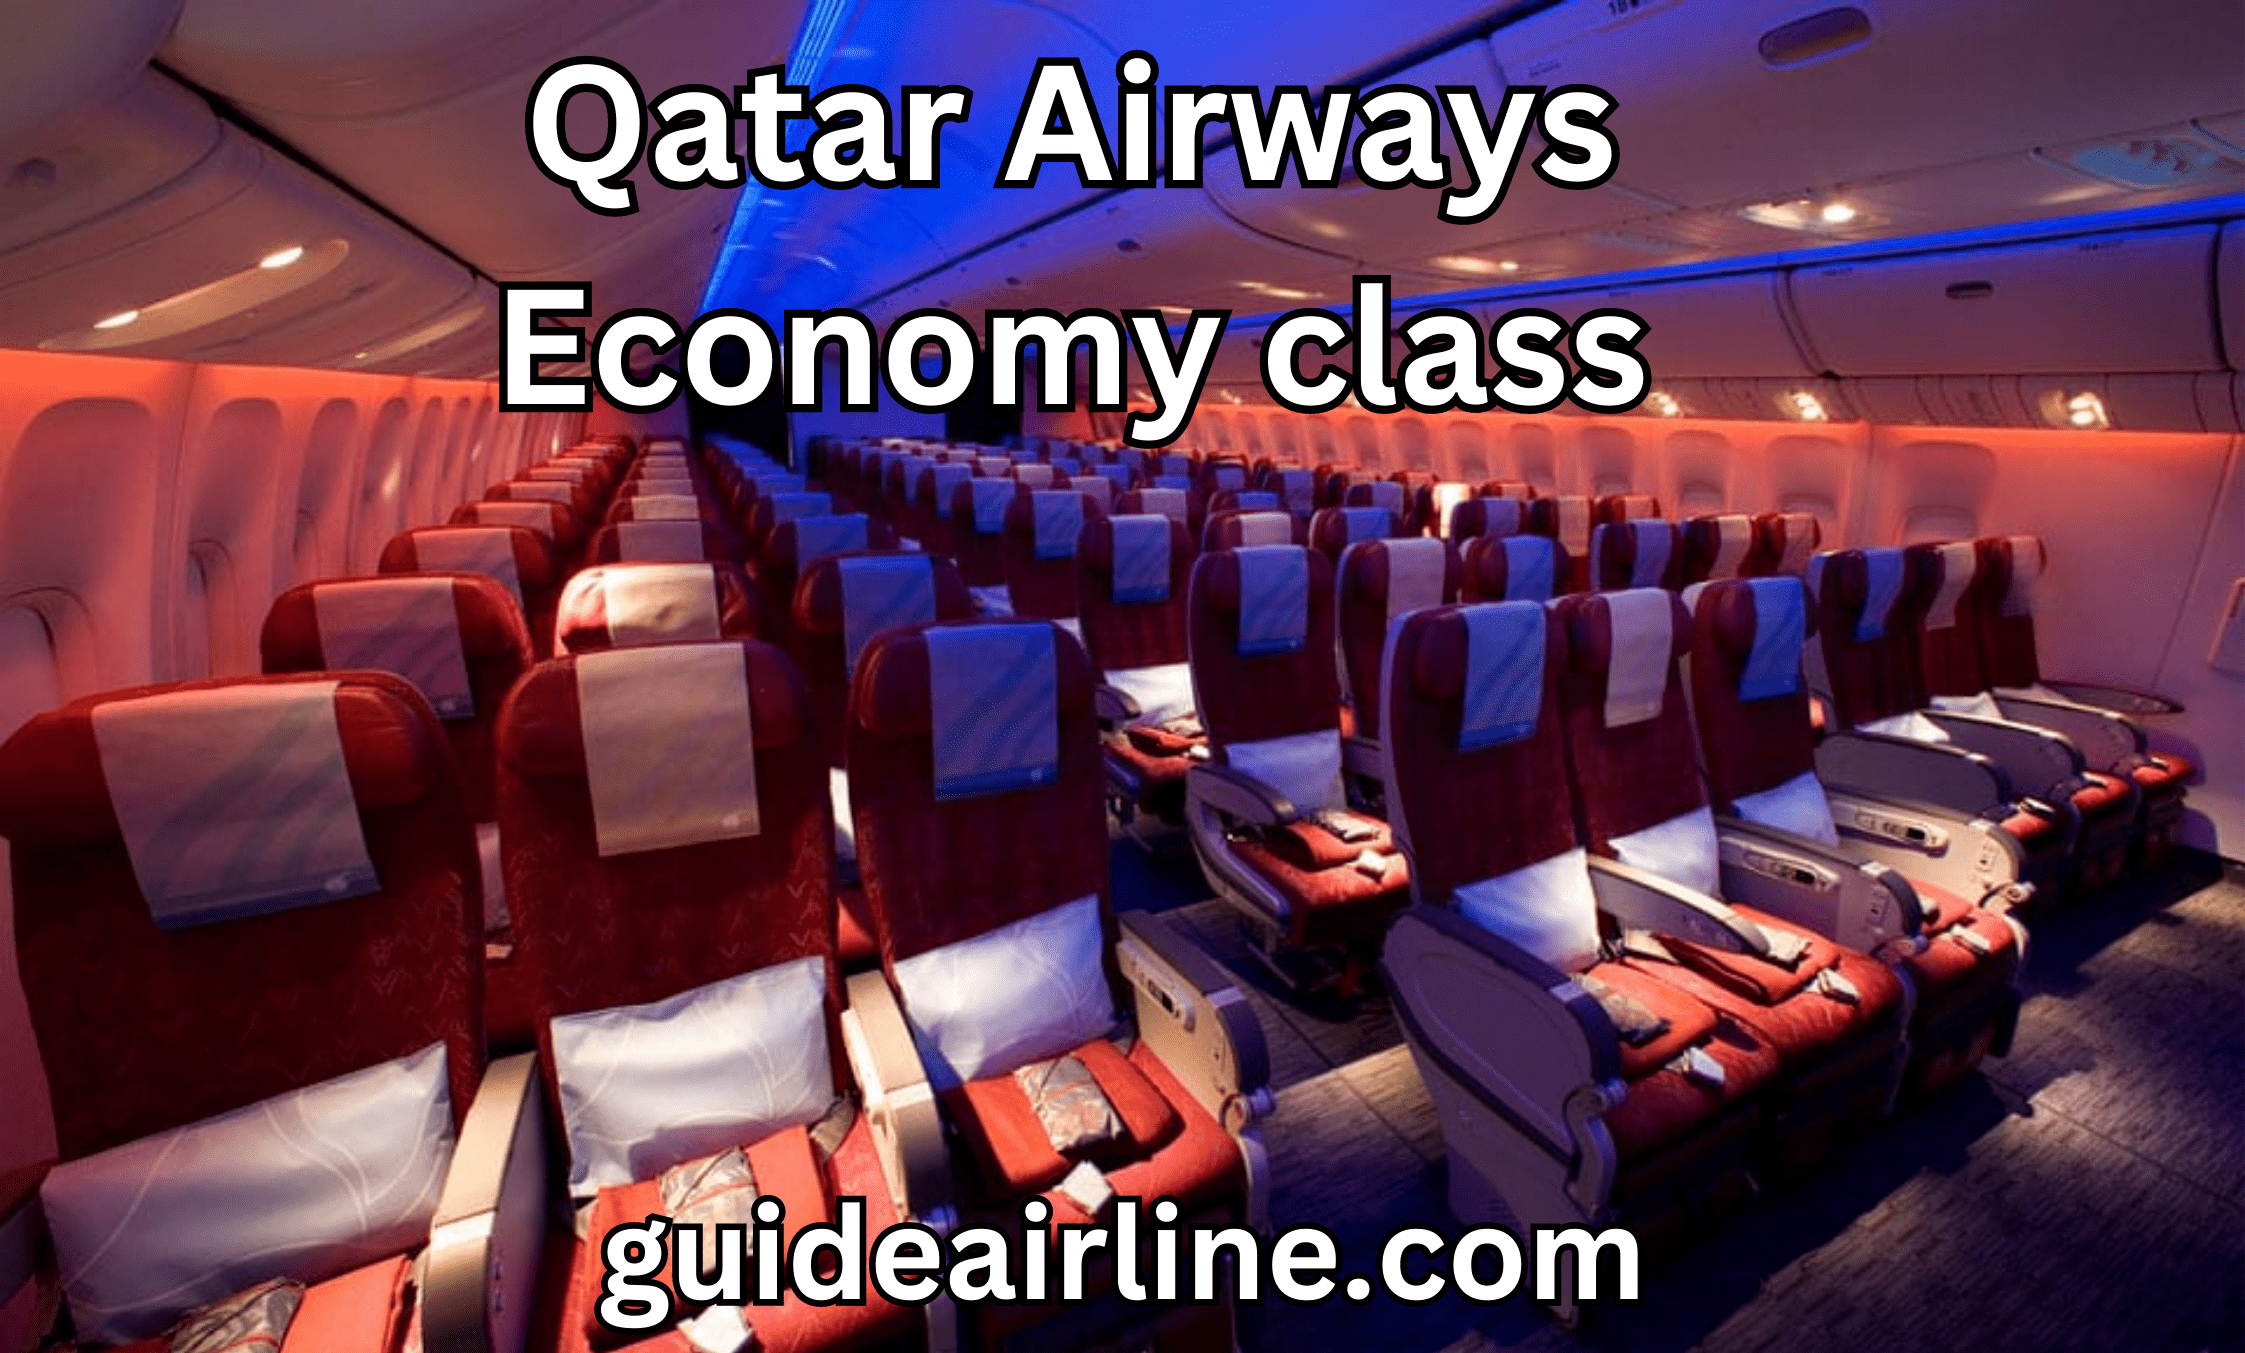 Qatar Airways Economy class